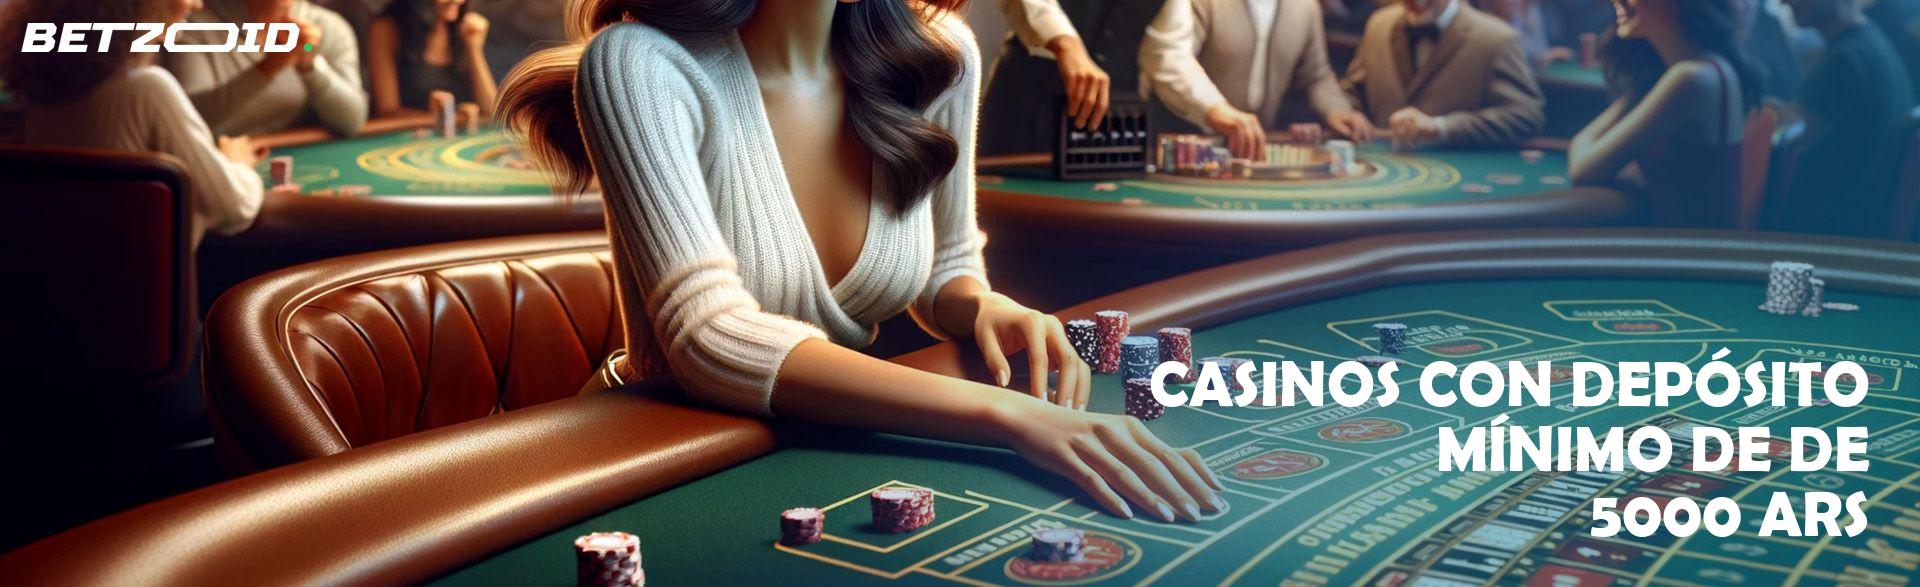 casino virtual argentina: Mantenlo simple